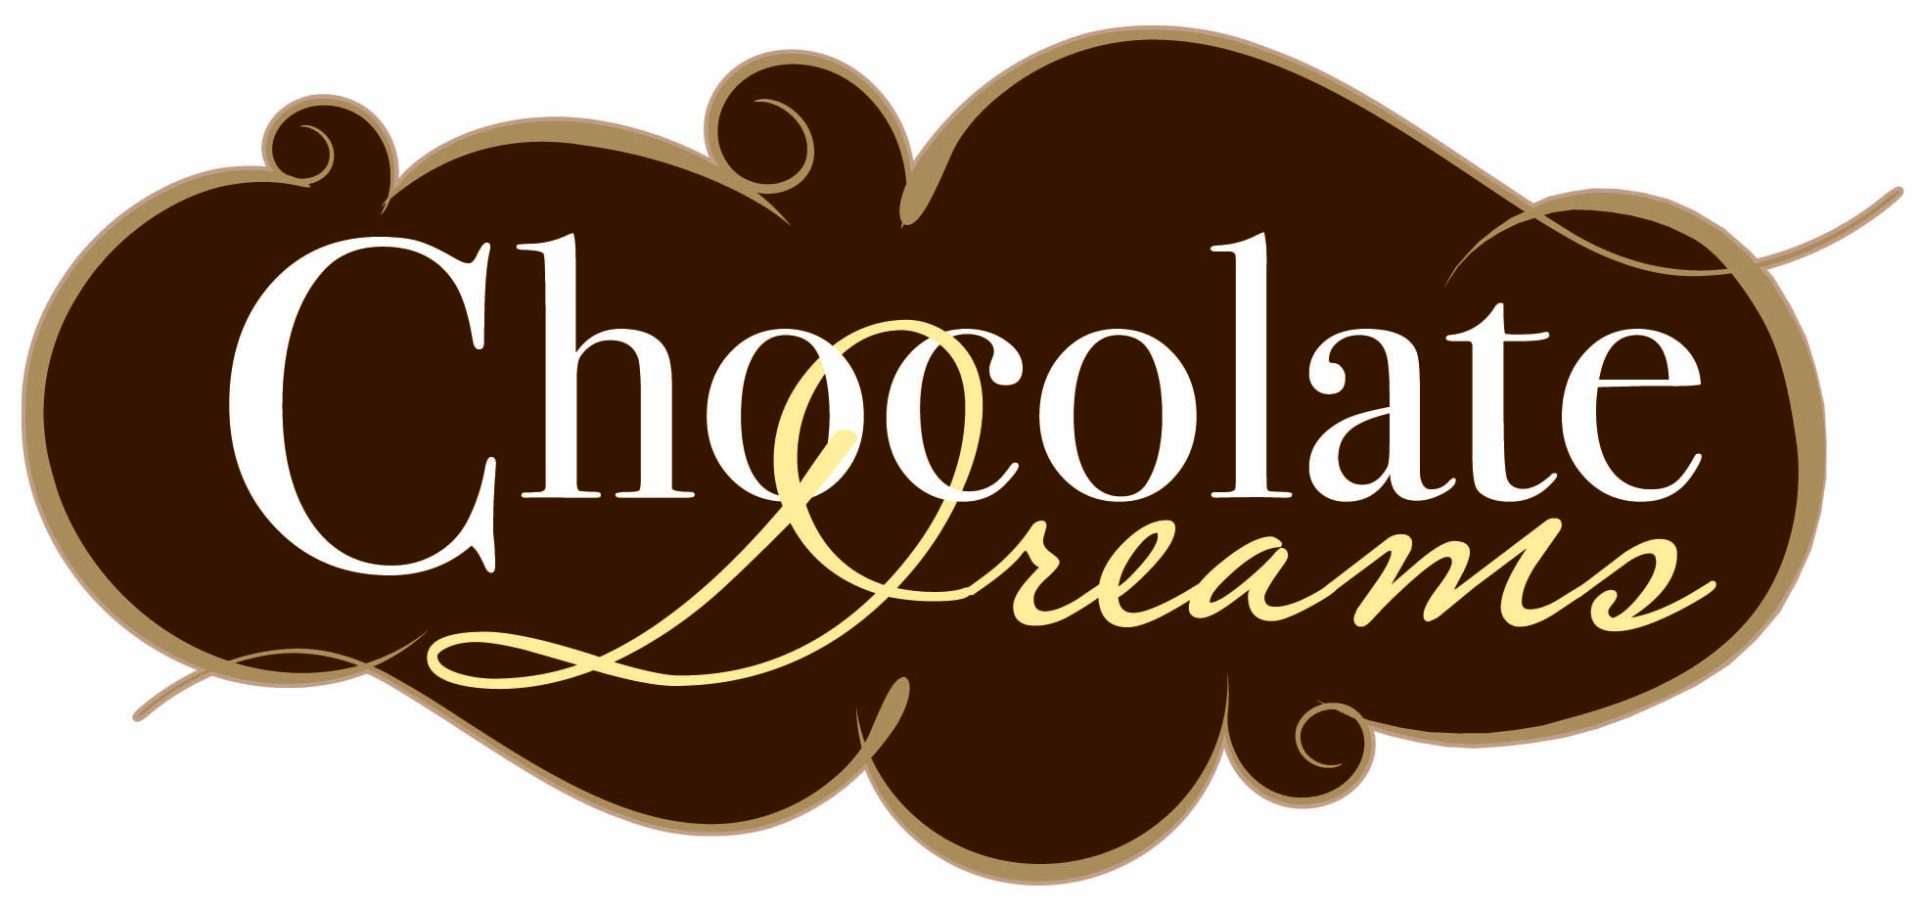 chocolate logo ideas 2